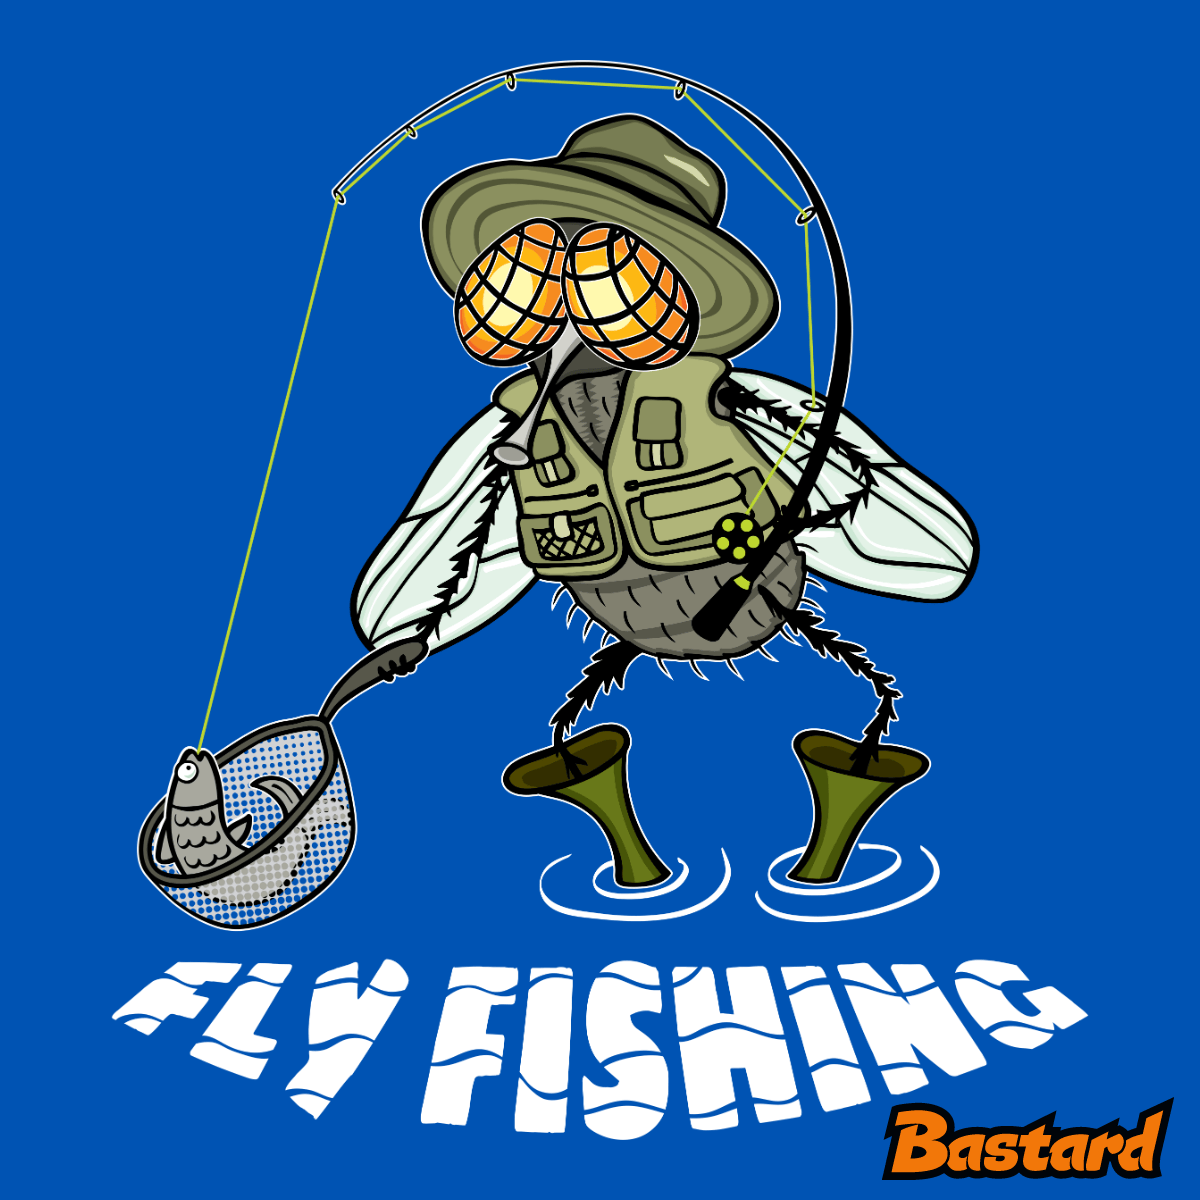 Fly fishing